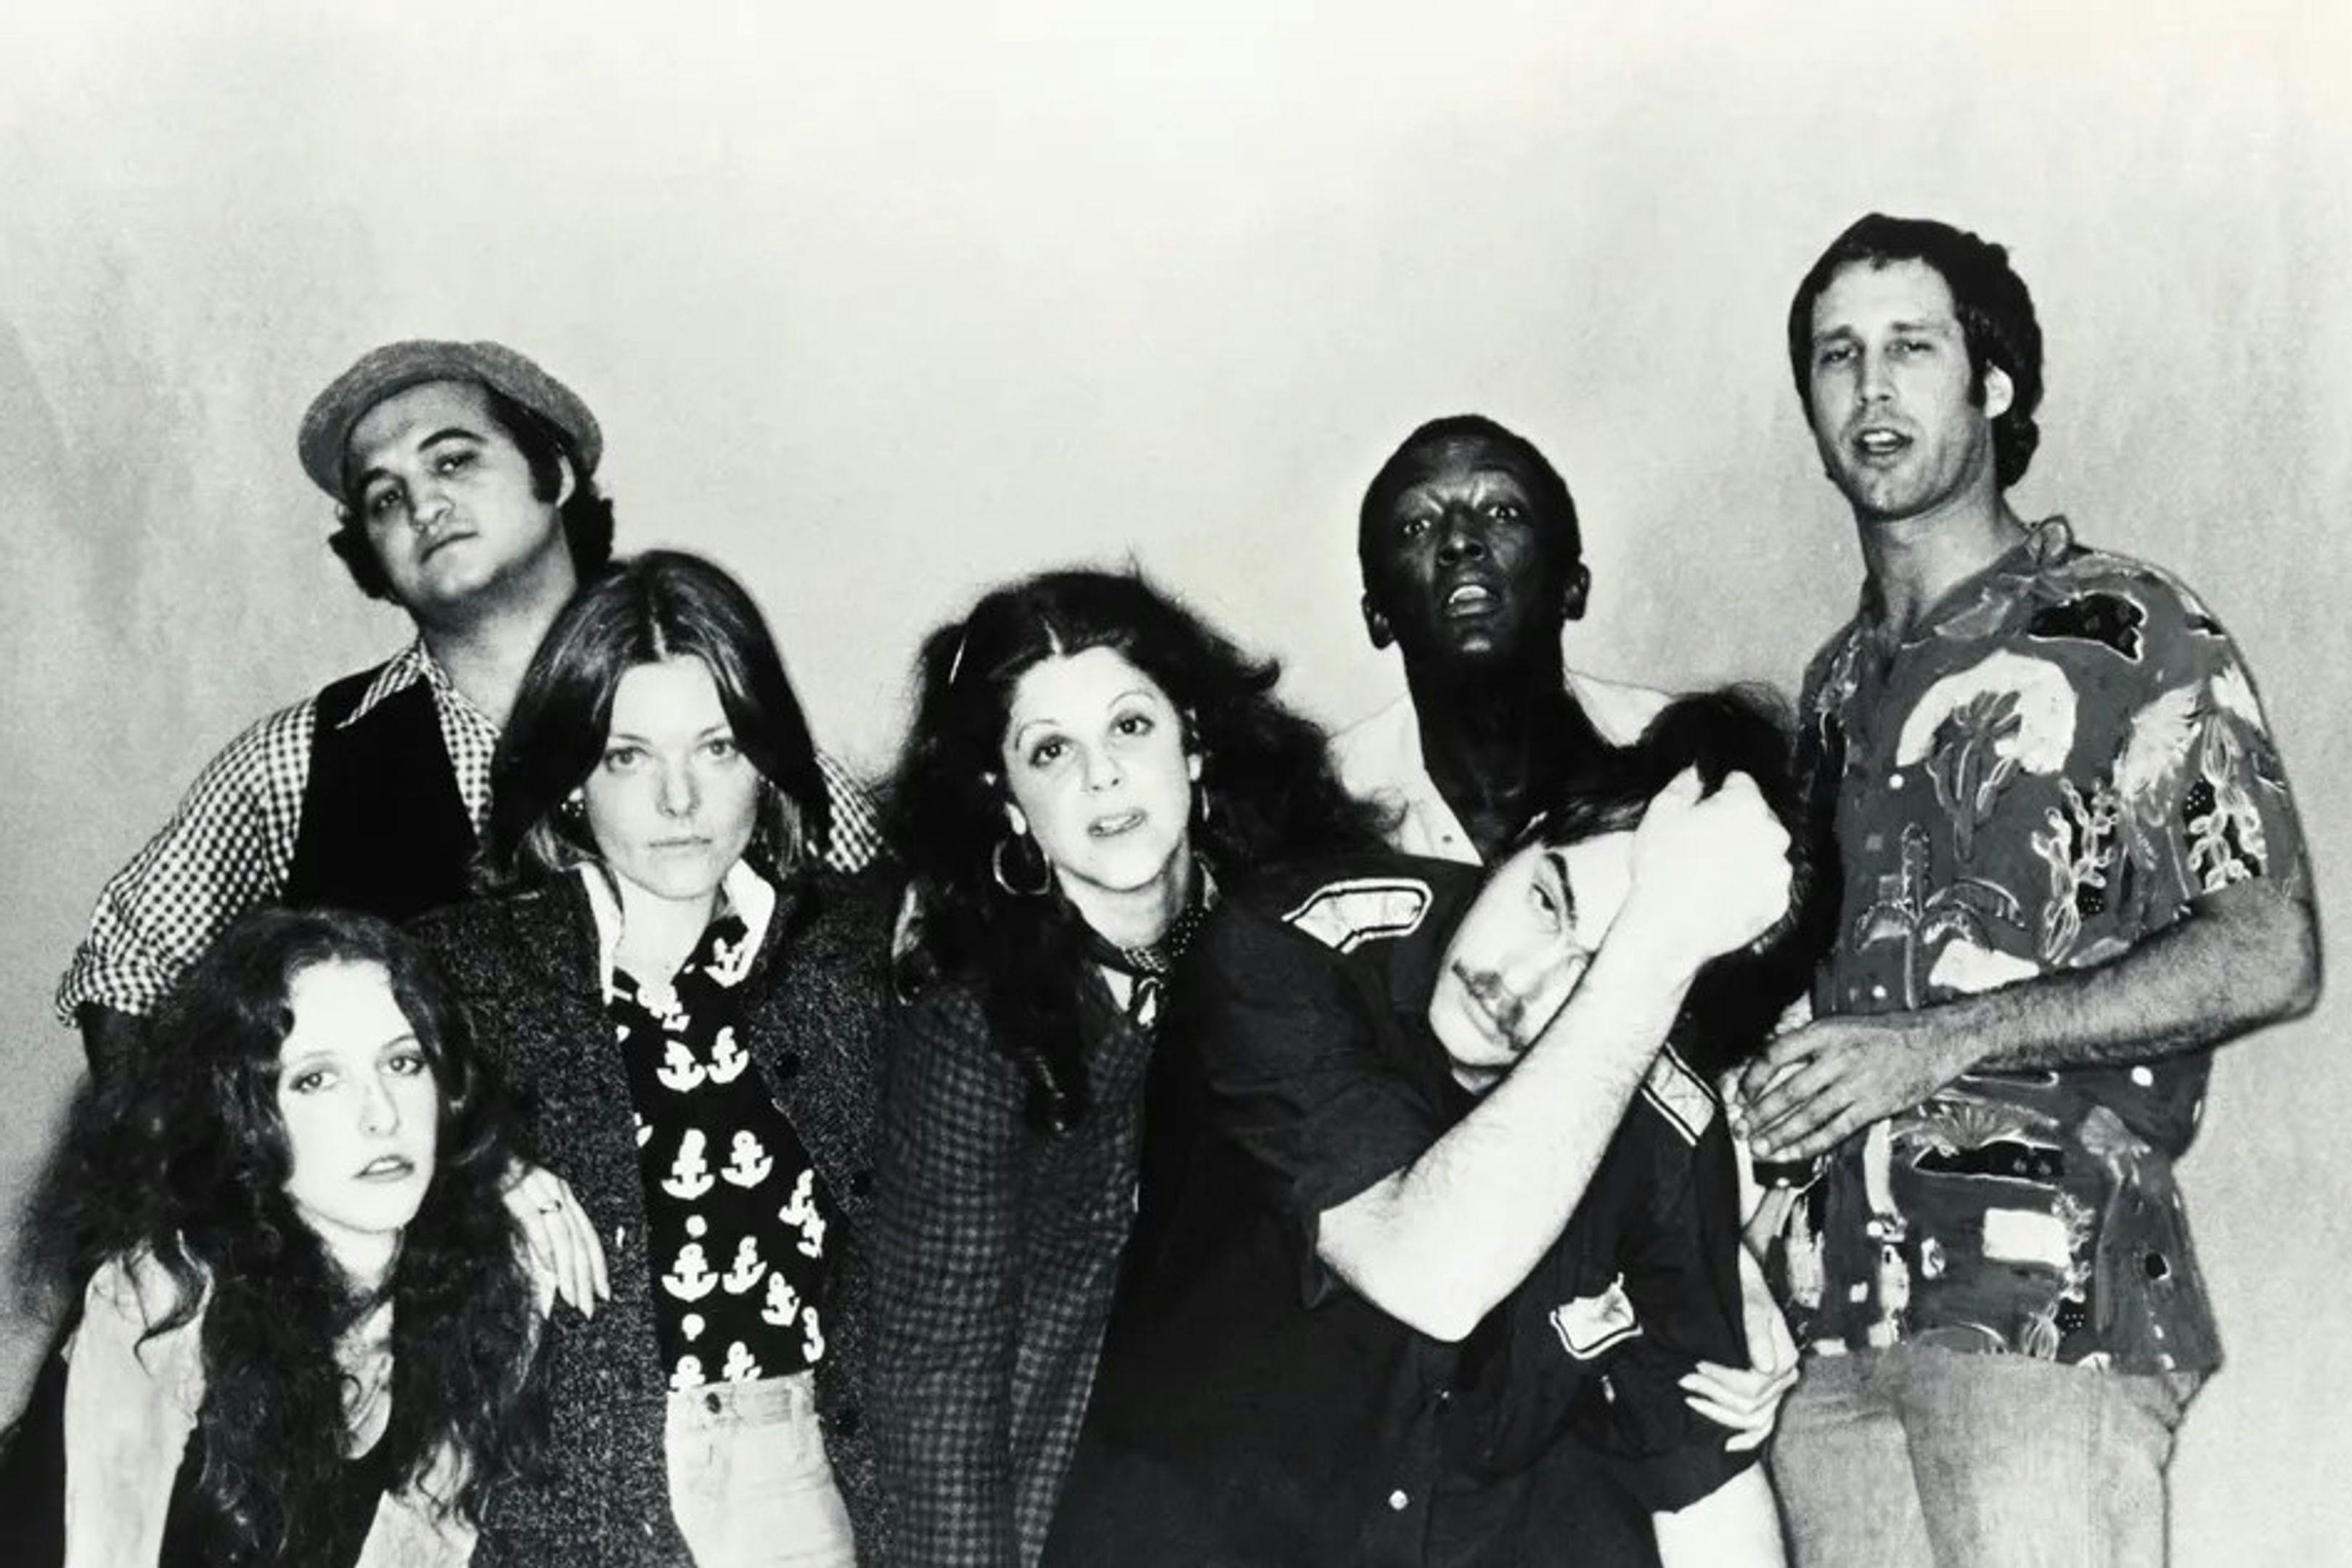 El reparto original de 'Saturday Night Live', con Laraine Newman, John Belushi, Jane Curtin, Gilda Radner, Garrett Morris, Dan Aykroyd y Chevy Chase.